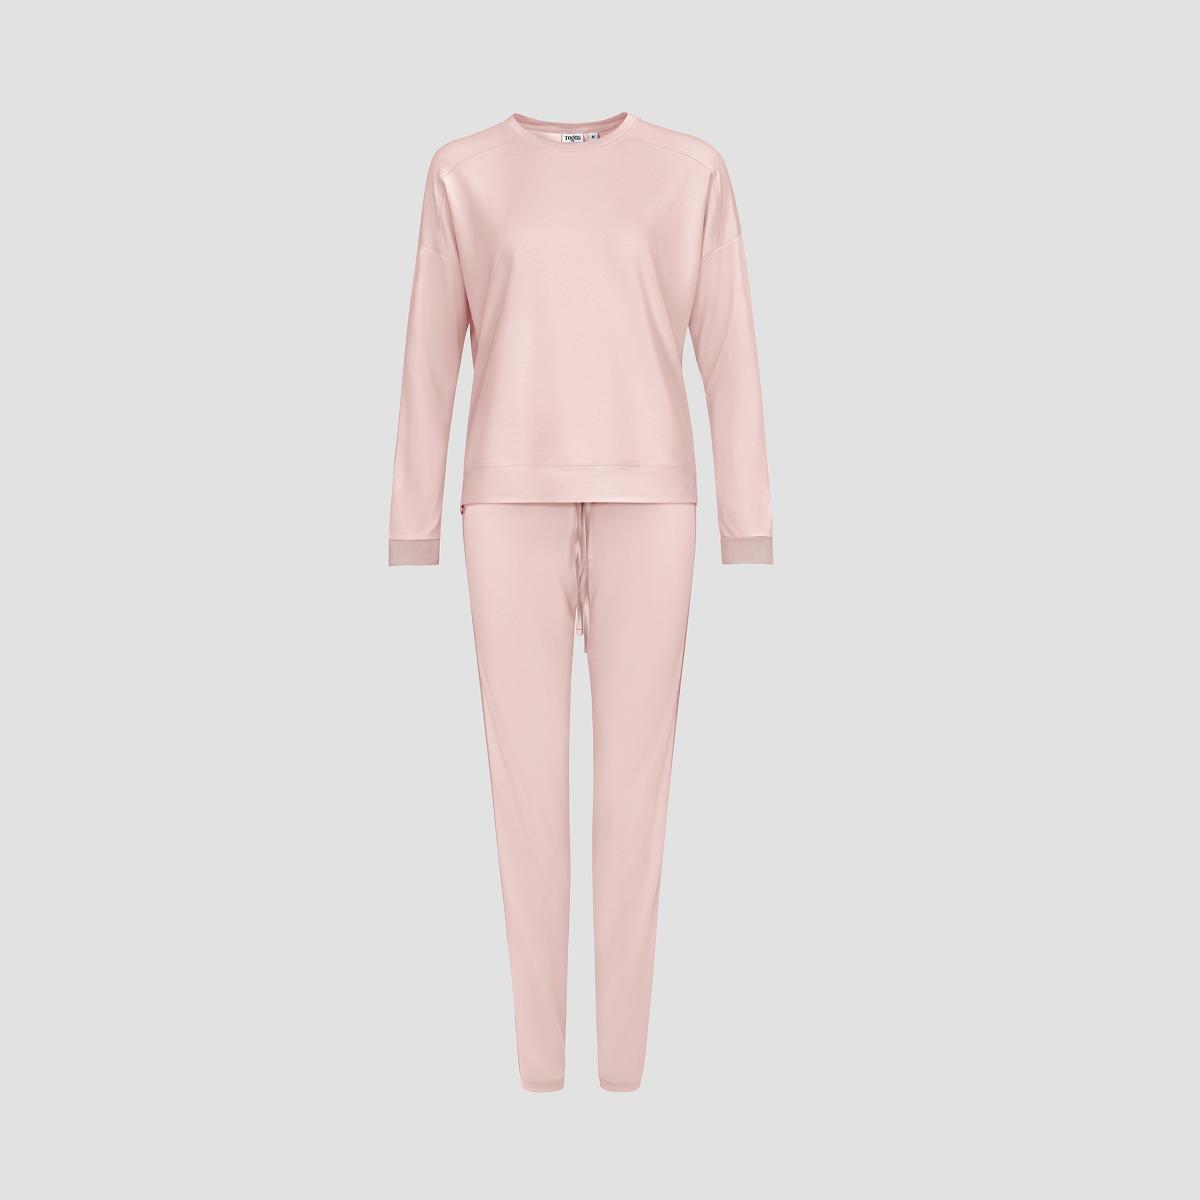 Пижама Togas Рене розовая женская жен пижама арт 17 0309 персиковый р 46